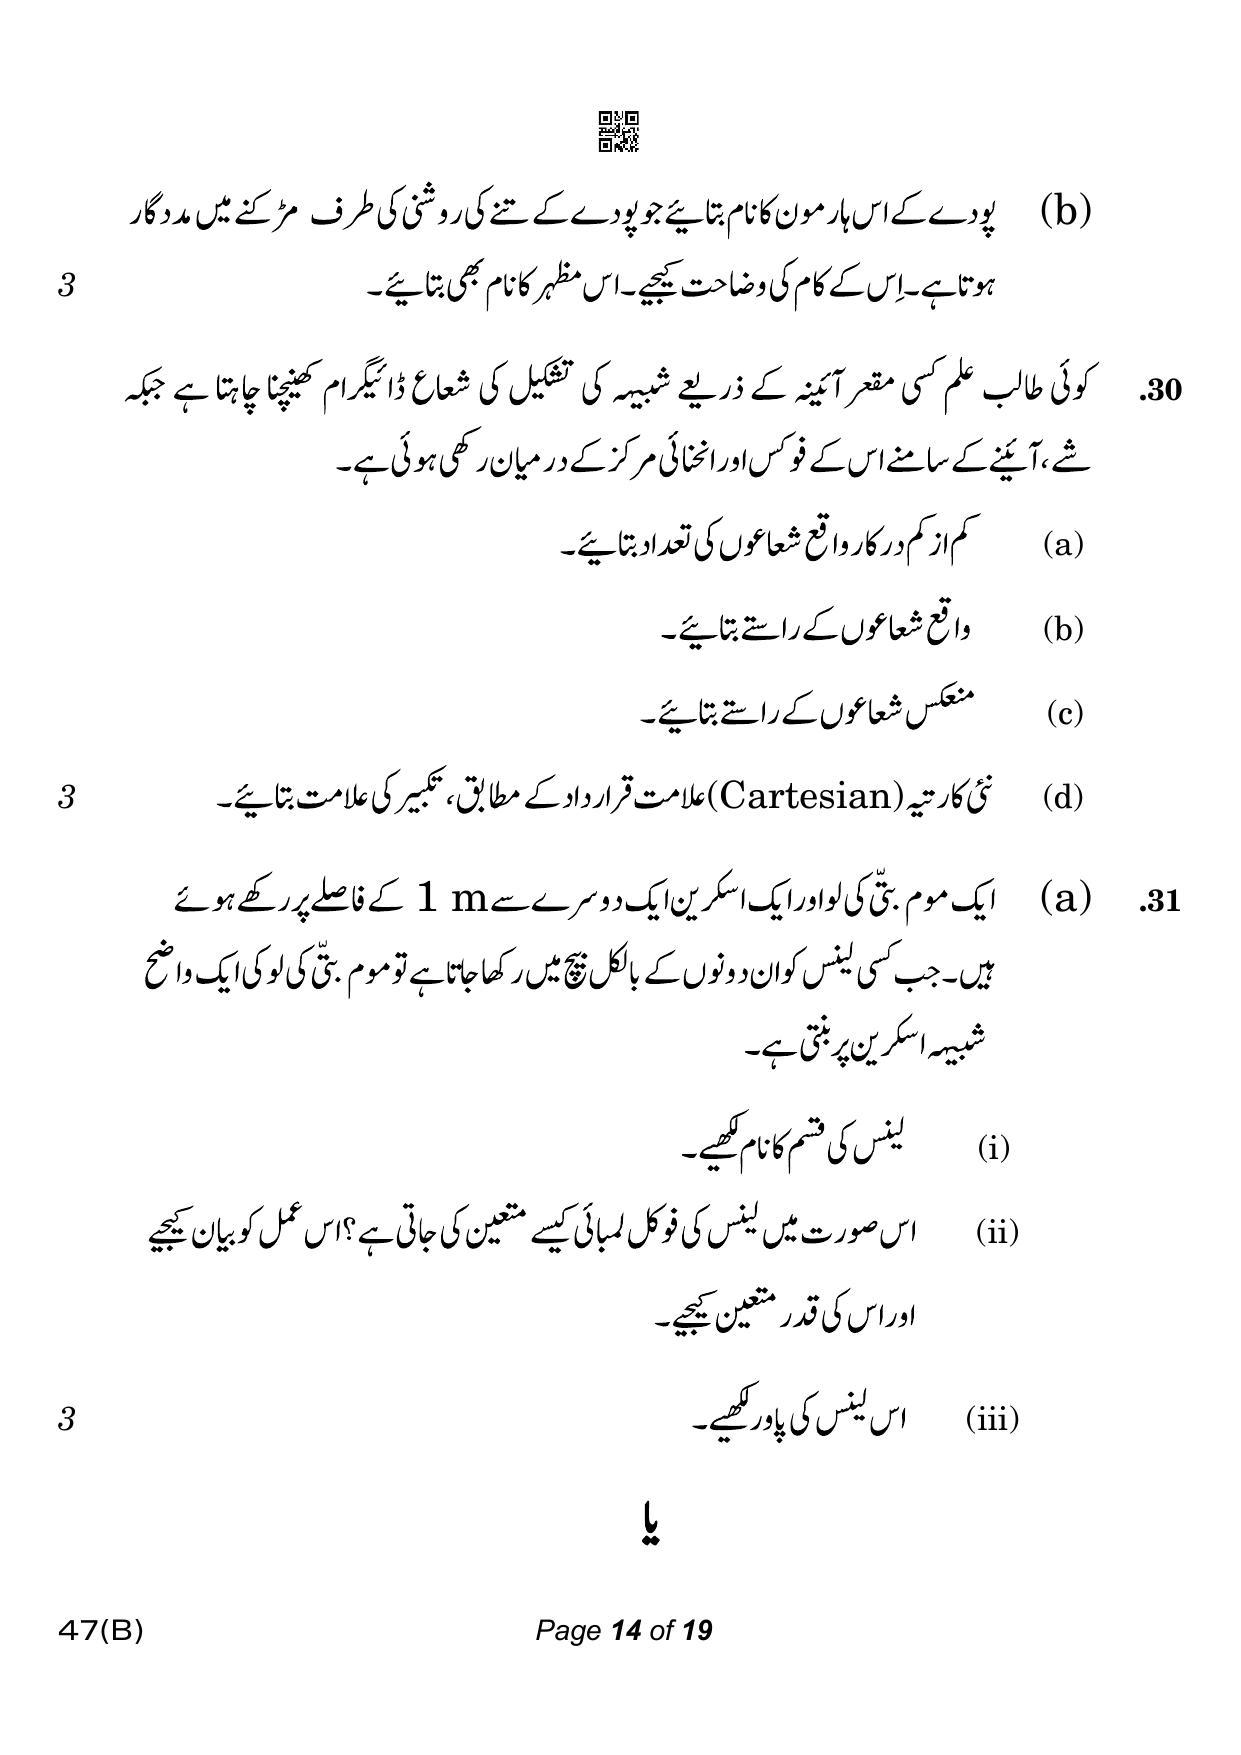 CBSE Class 10 47-B-5 Science for VI Urdu Version 2023 Question Paper - Page 14